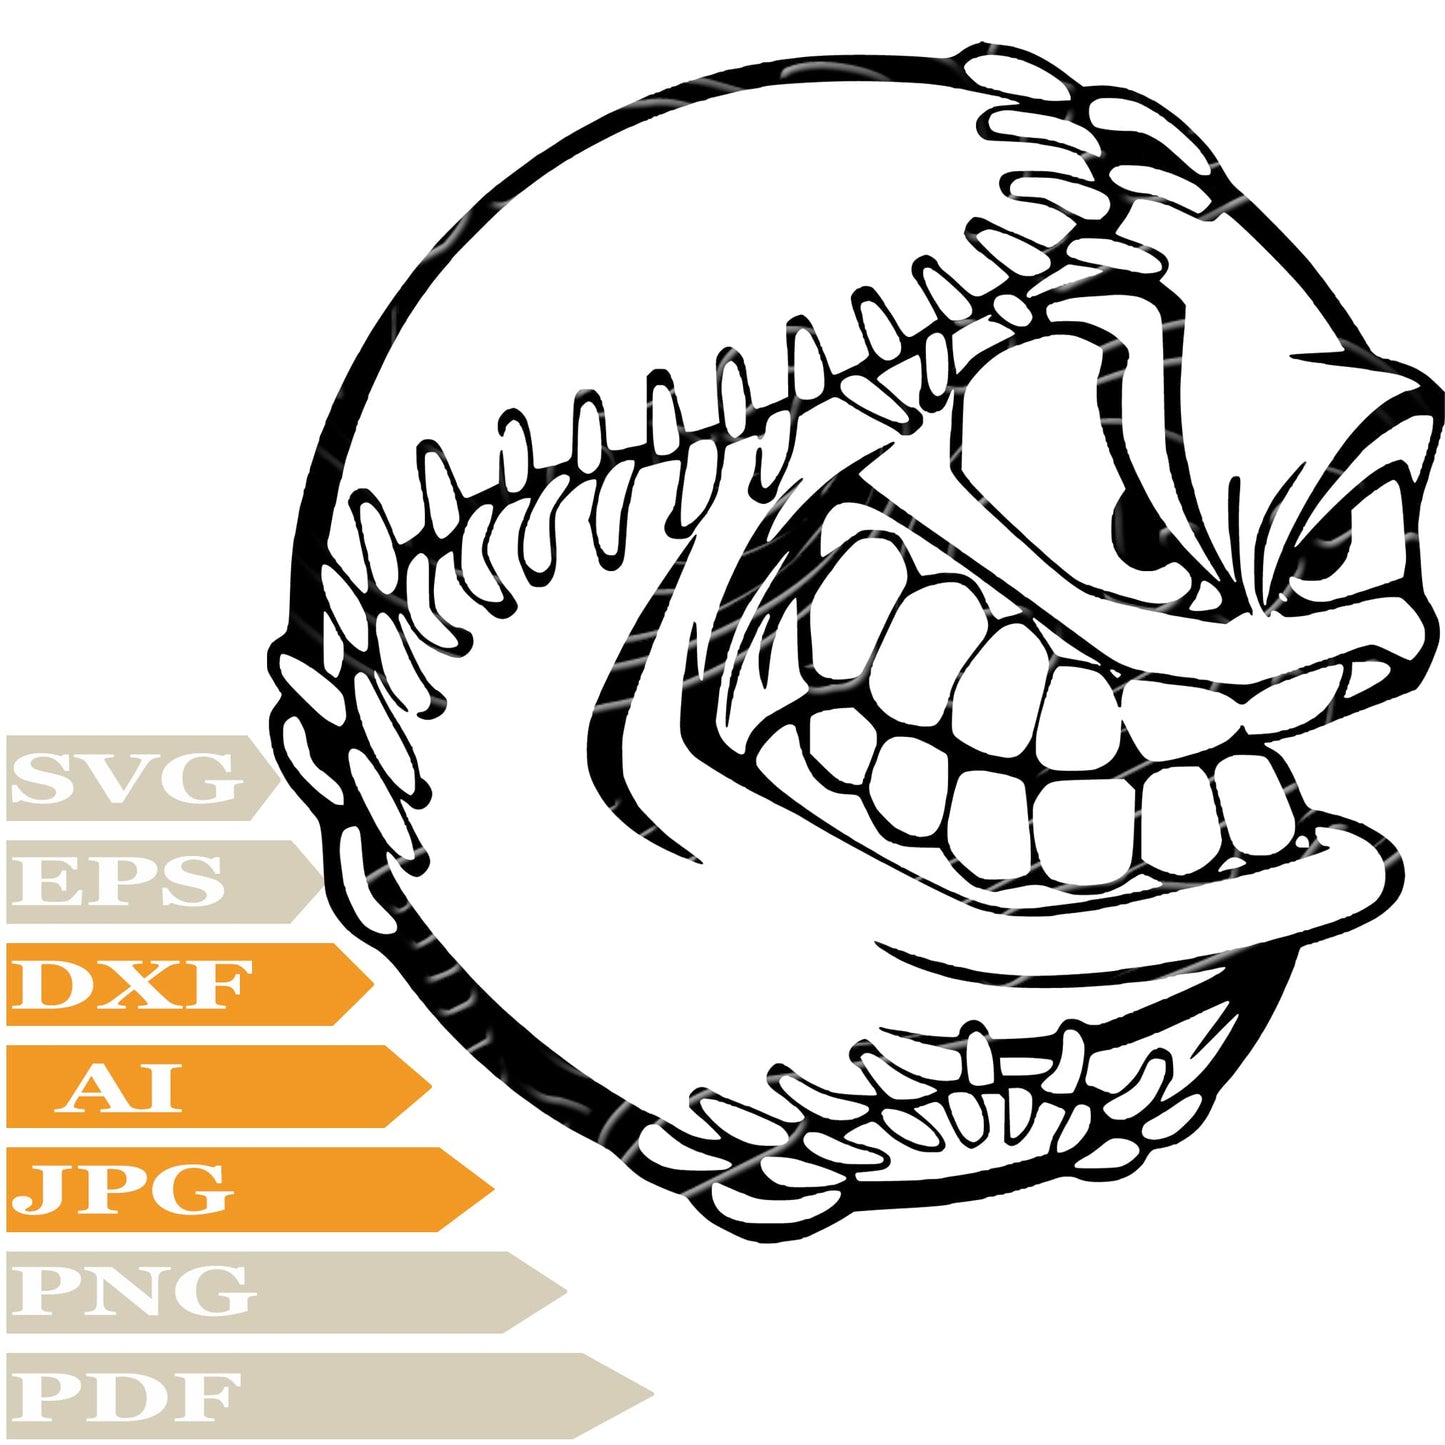 Baseball Funny Smile, Baseball Bat Svg File, Image Cut, Png, For Tattoo, Silhouette, Digital Vector Download, Cut File, Clipart, For Cricut